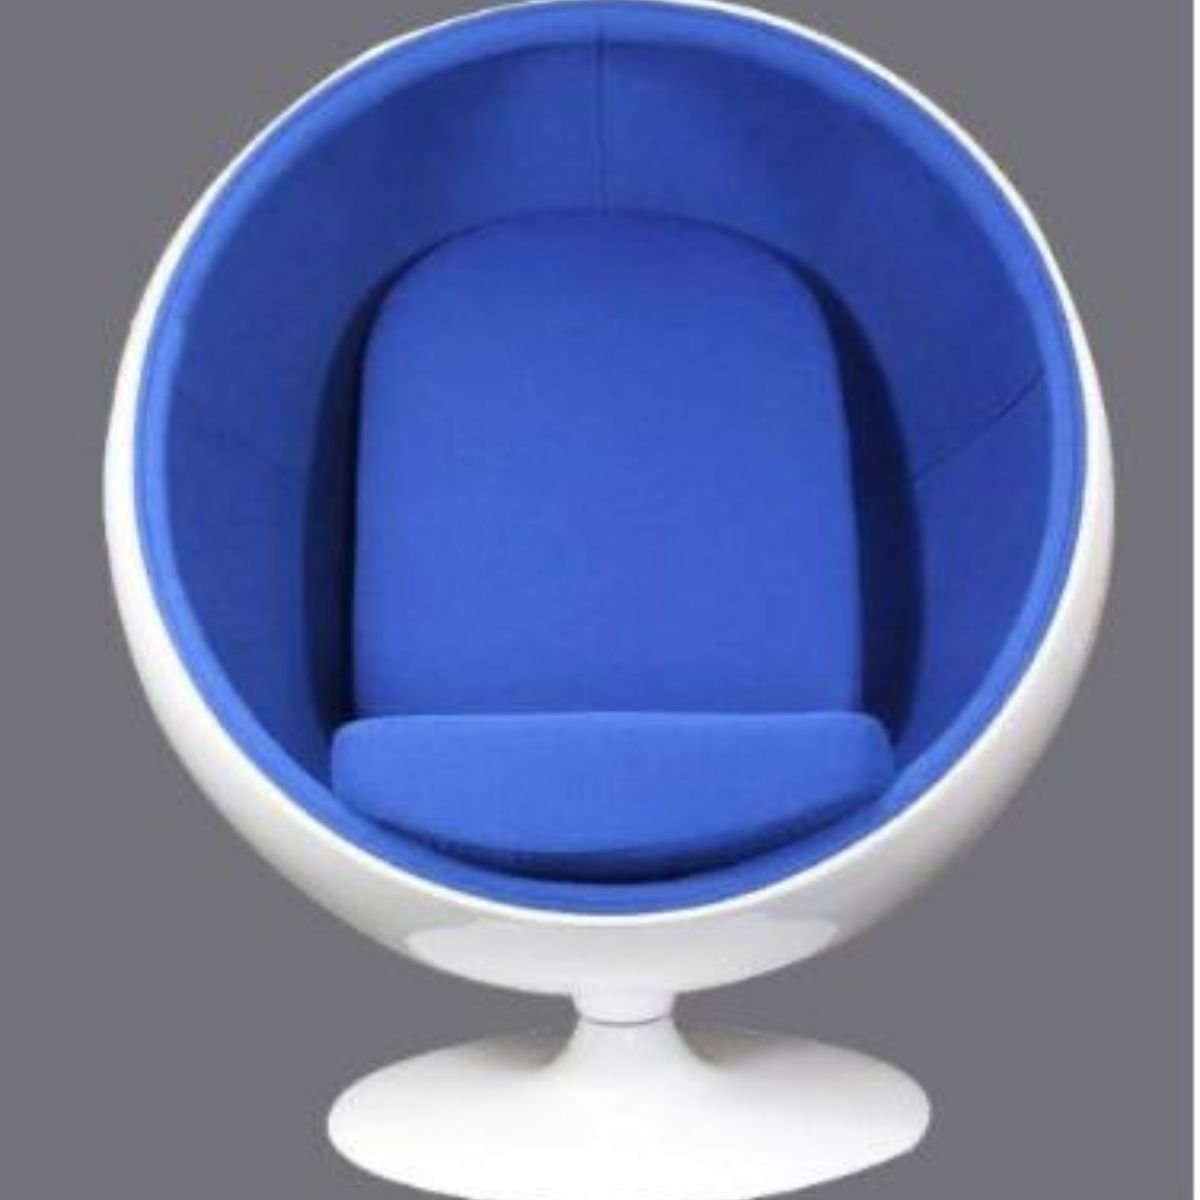 Poltrona Ball Chair Azul Linn Design Decor - 4